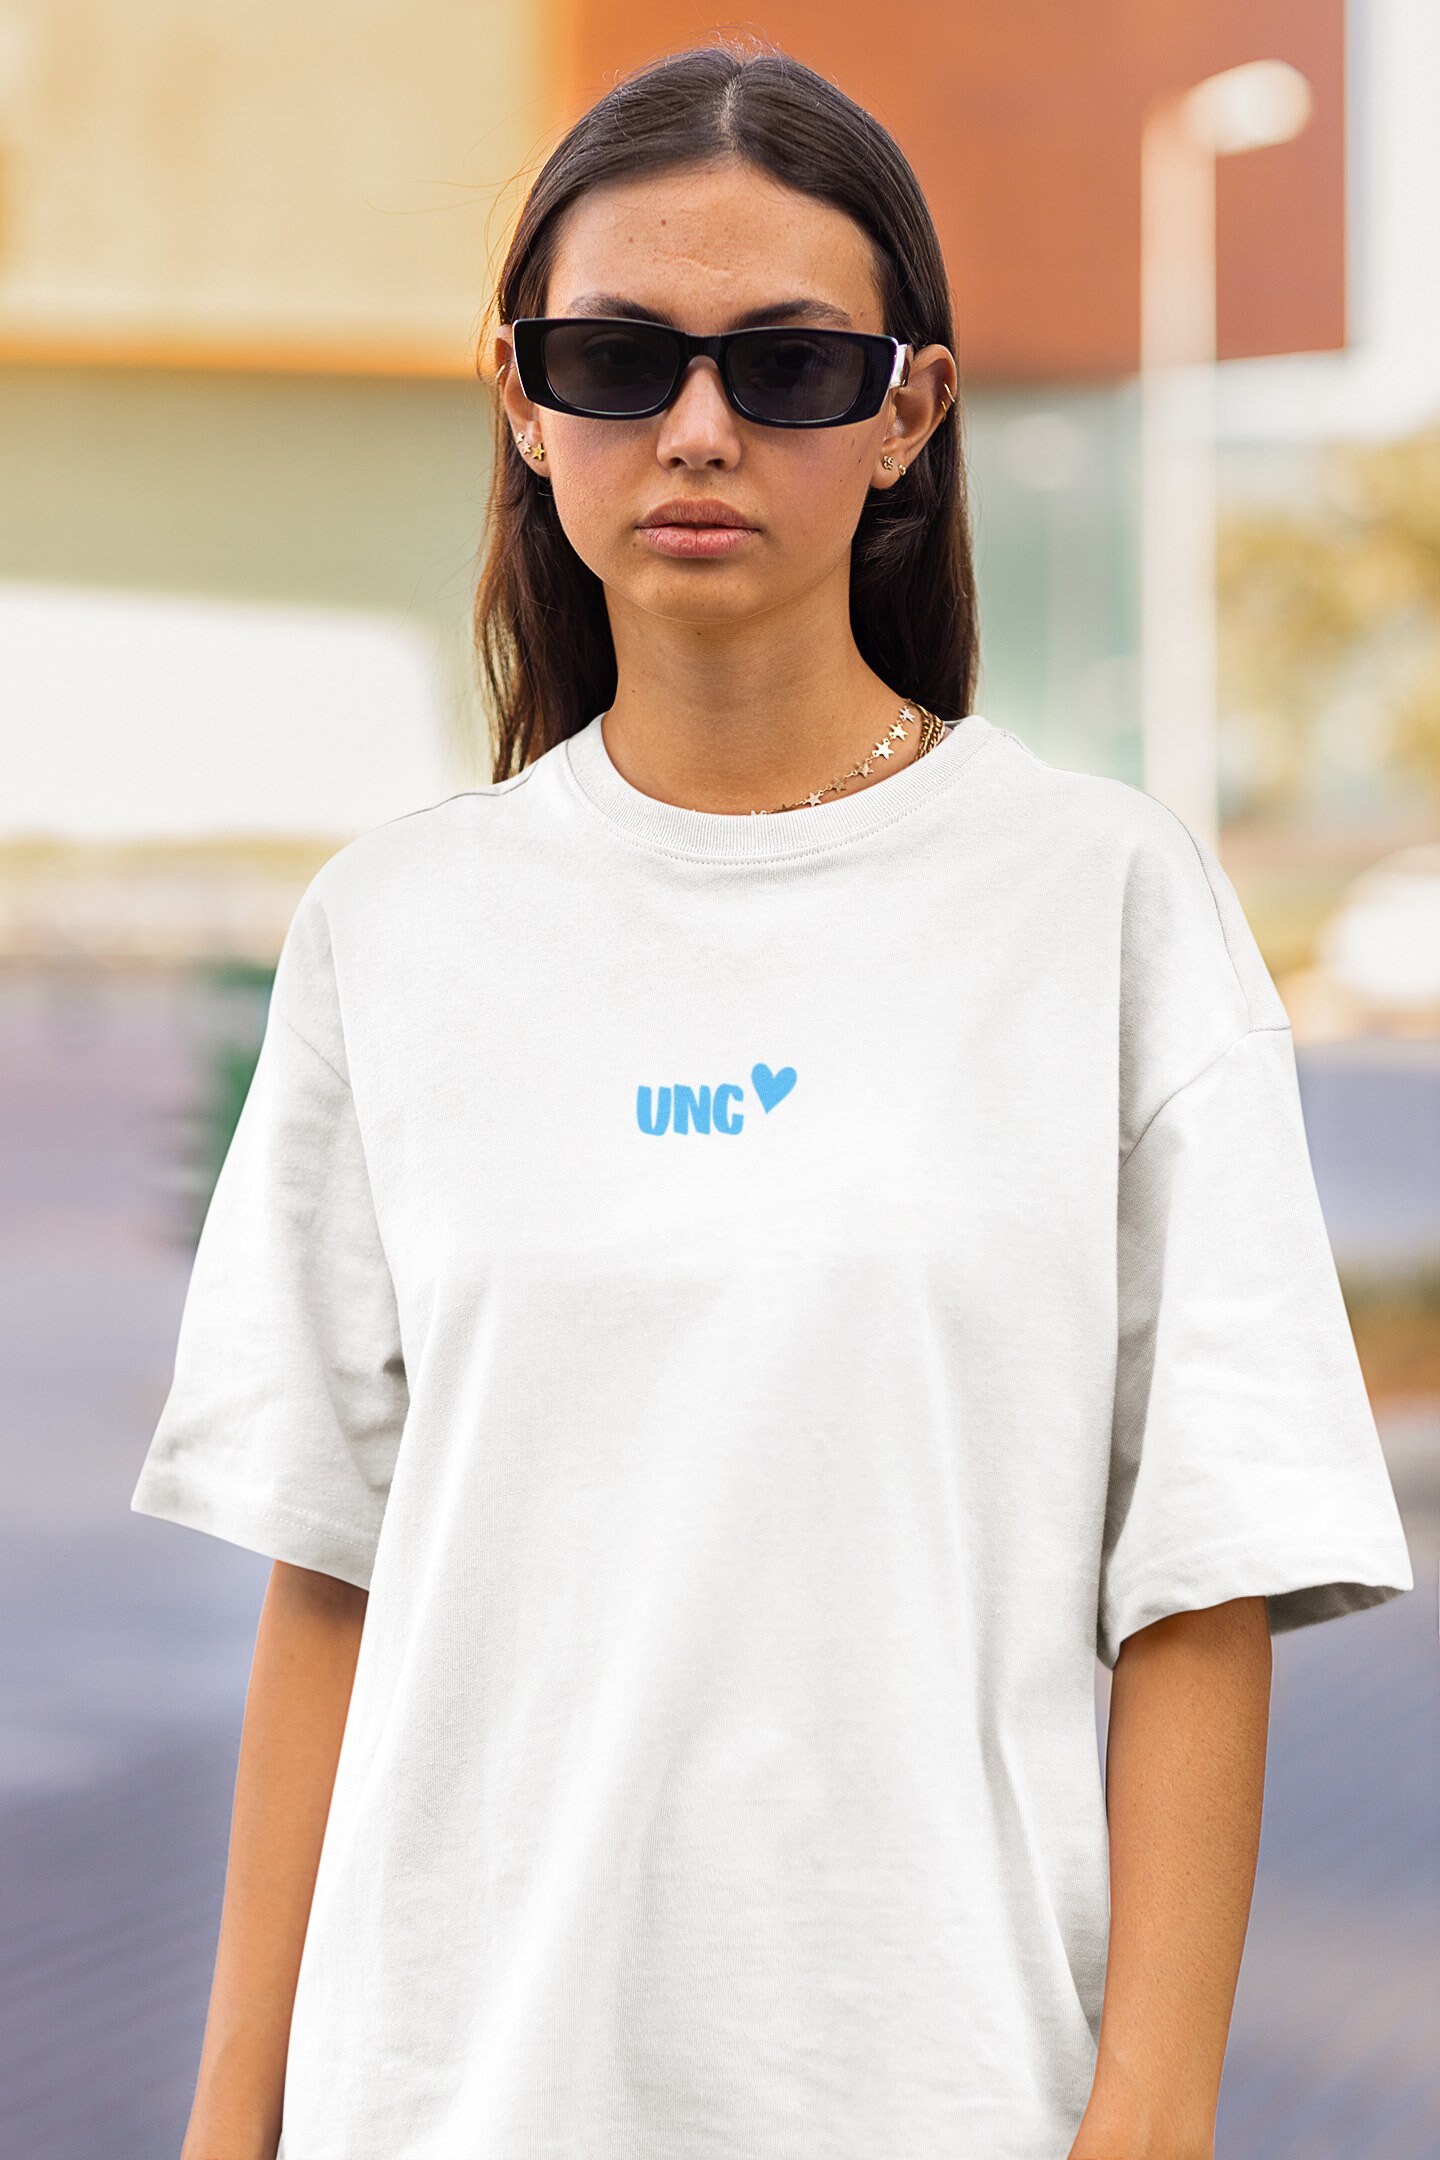 Discover University of North Carolina Shirt